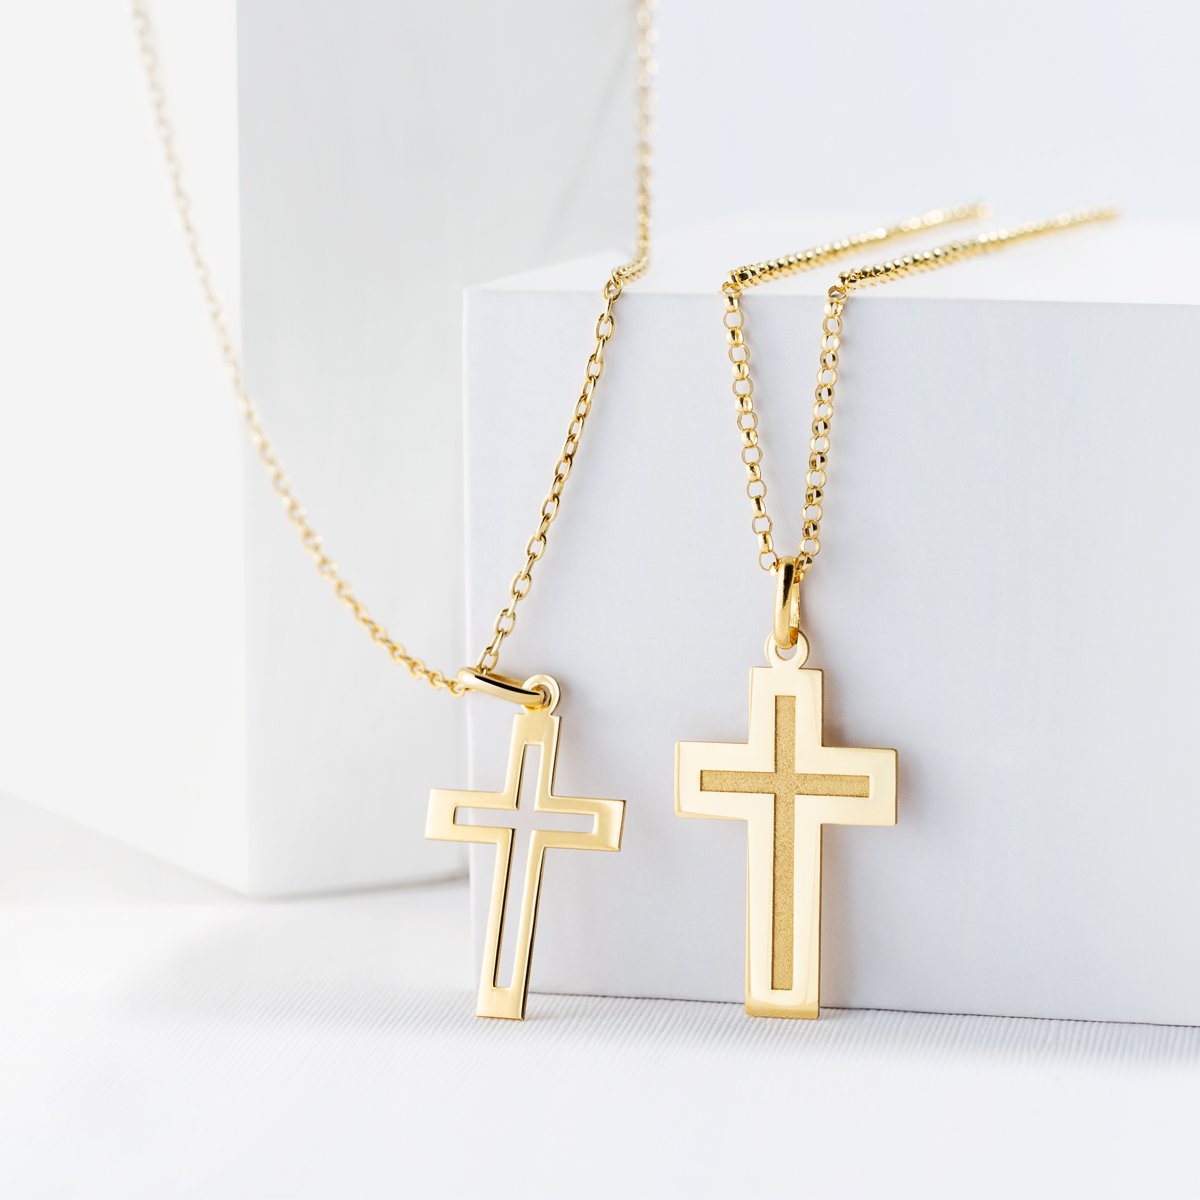 dos hermosas cruces de oro recomendables como regalo de primera comunion. Disponibles para comprar en Alicante en Joyeria Marga Mira